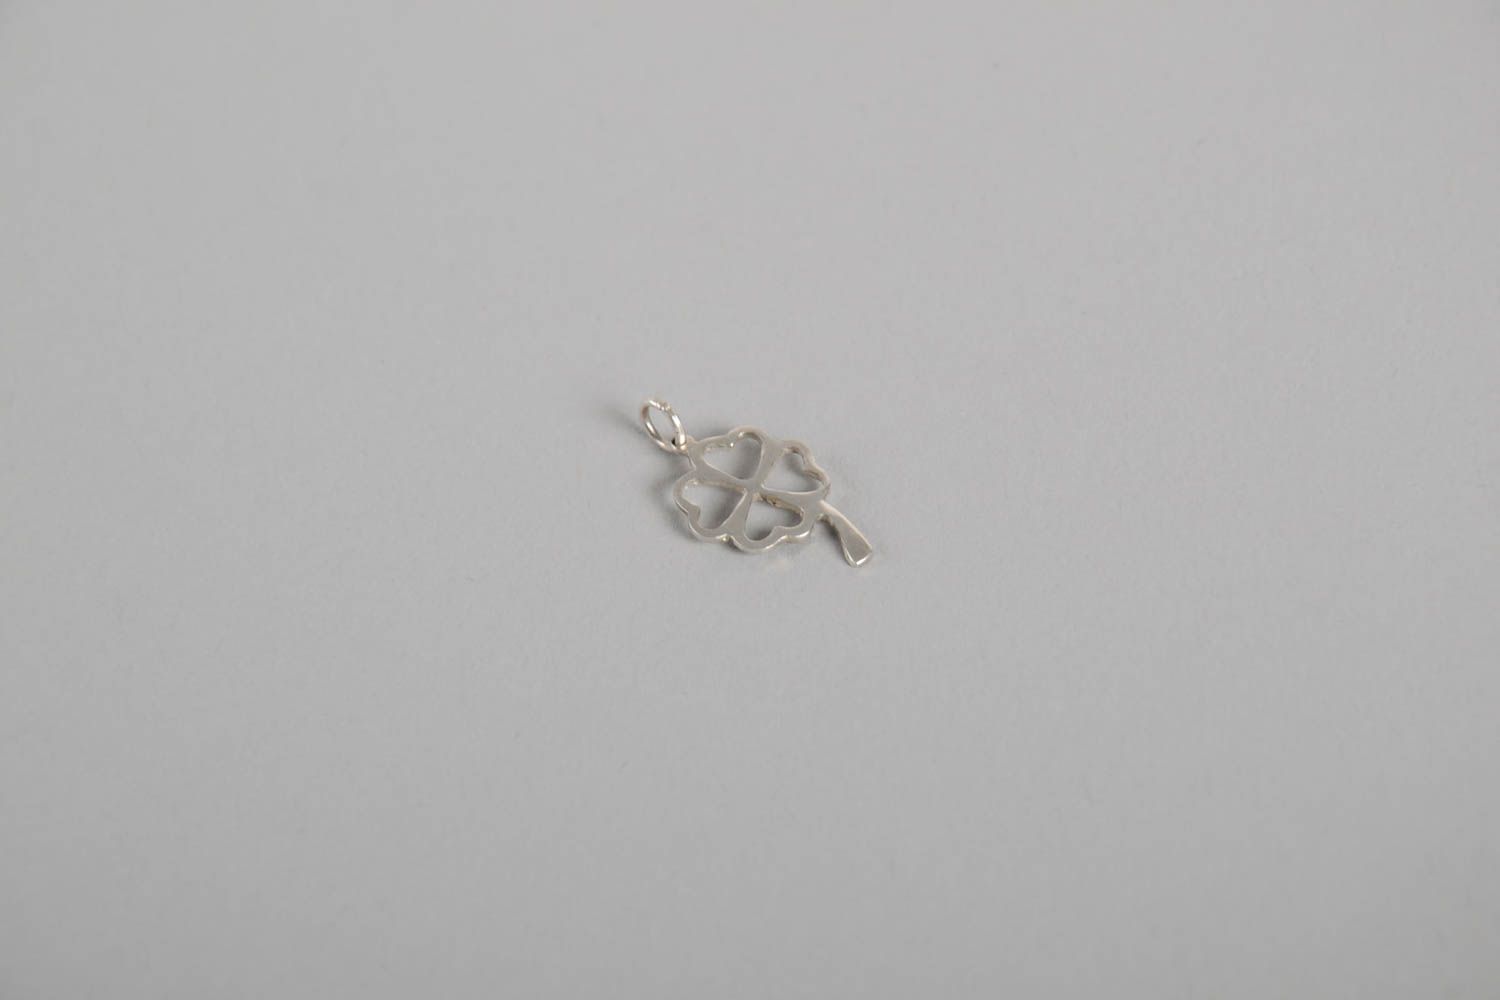 Handmade pendant designer accessory gift ideas silver jewelry silver pendant photo 3